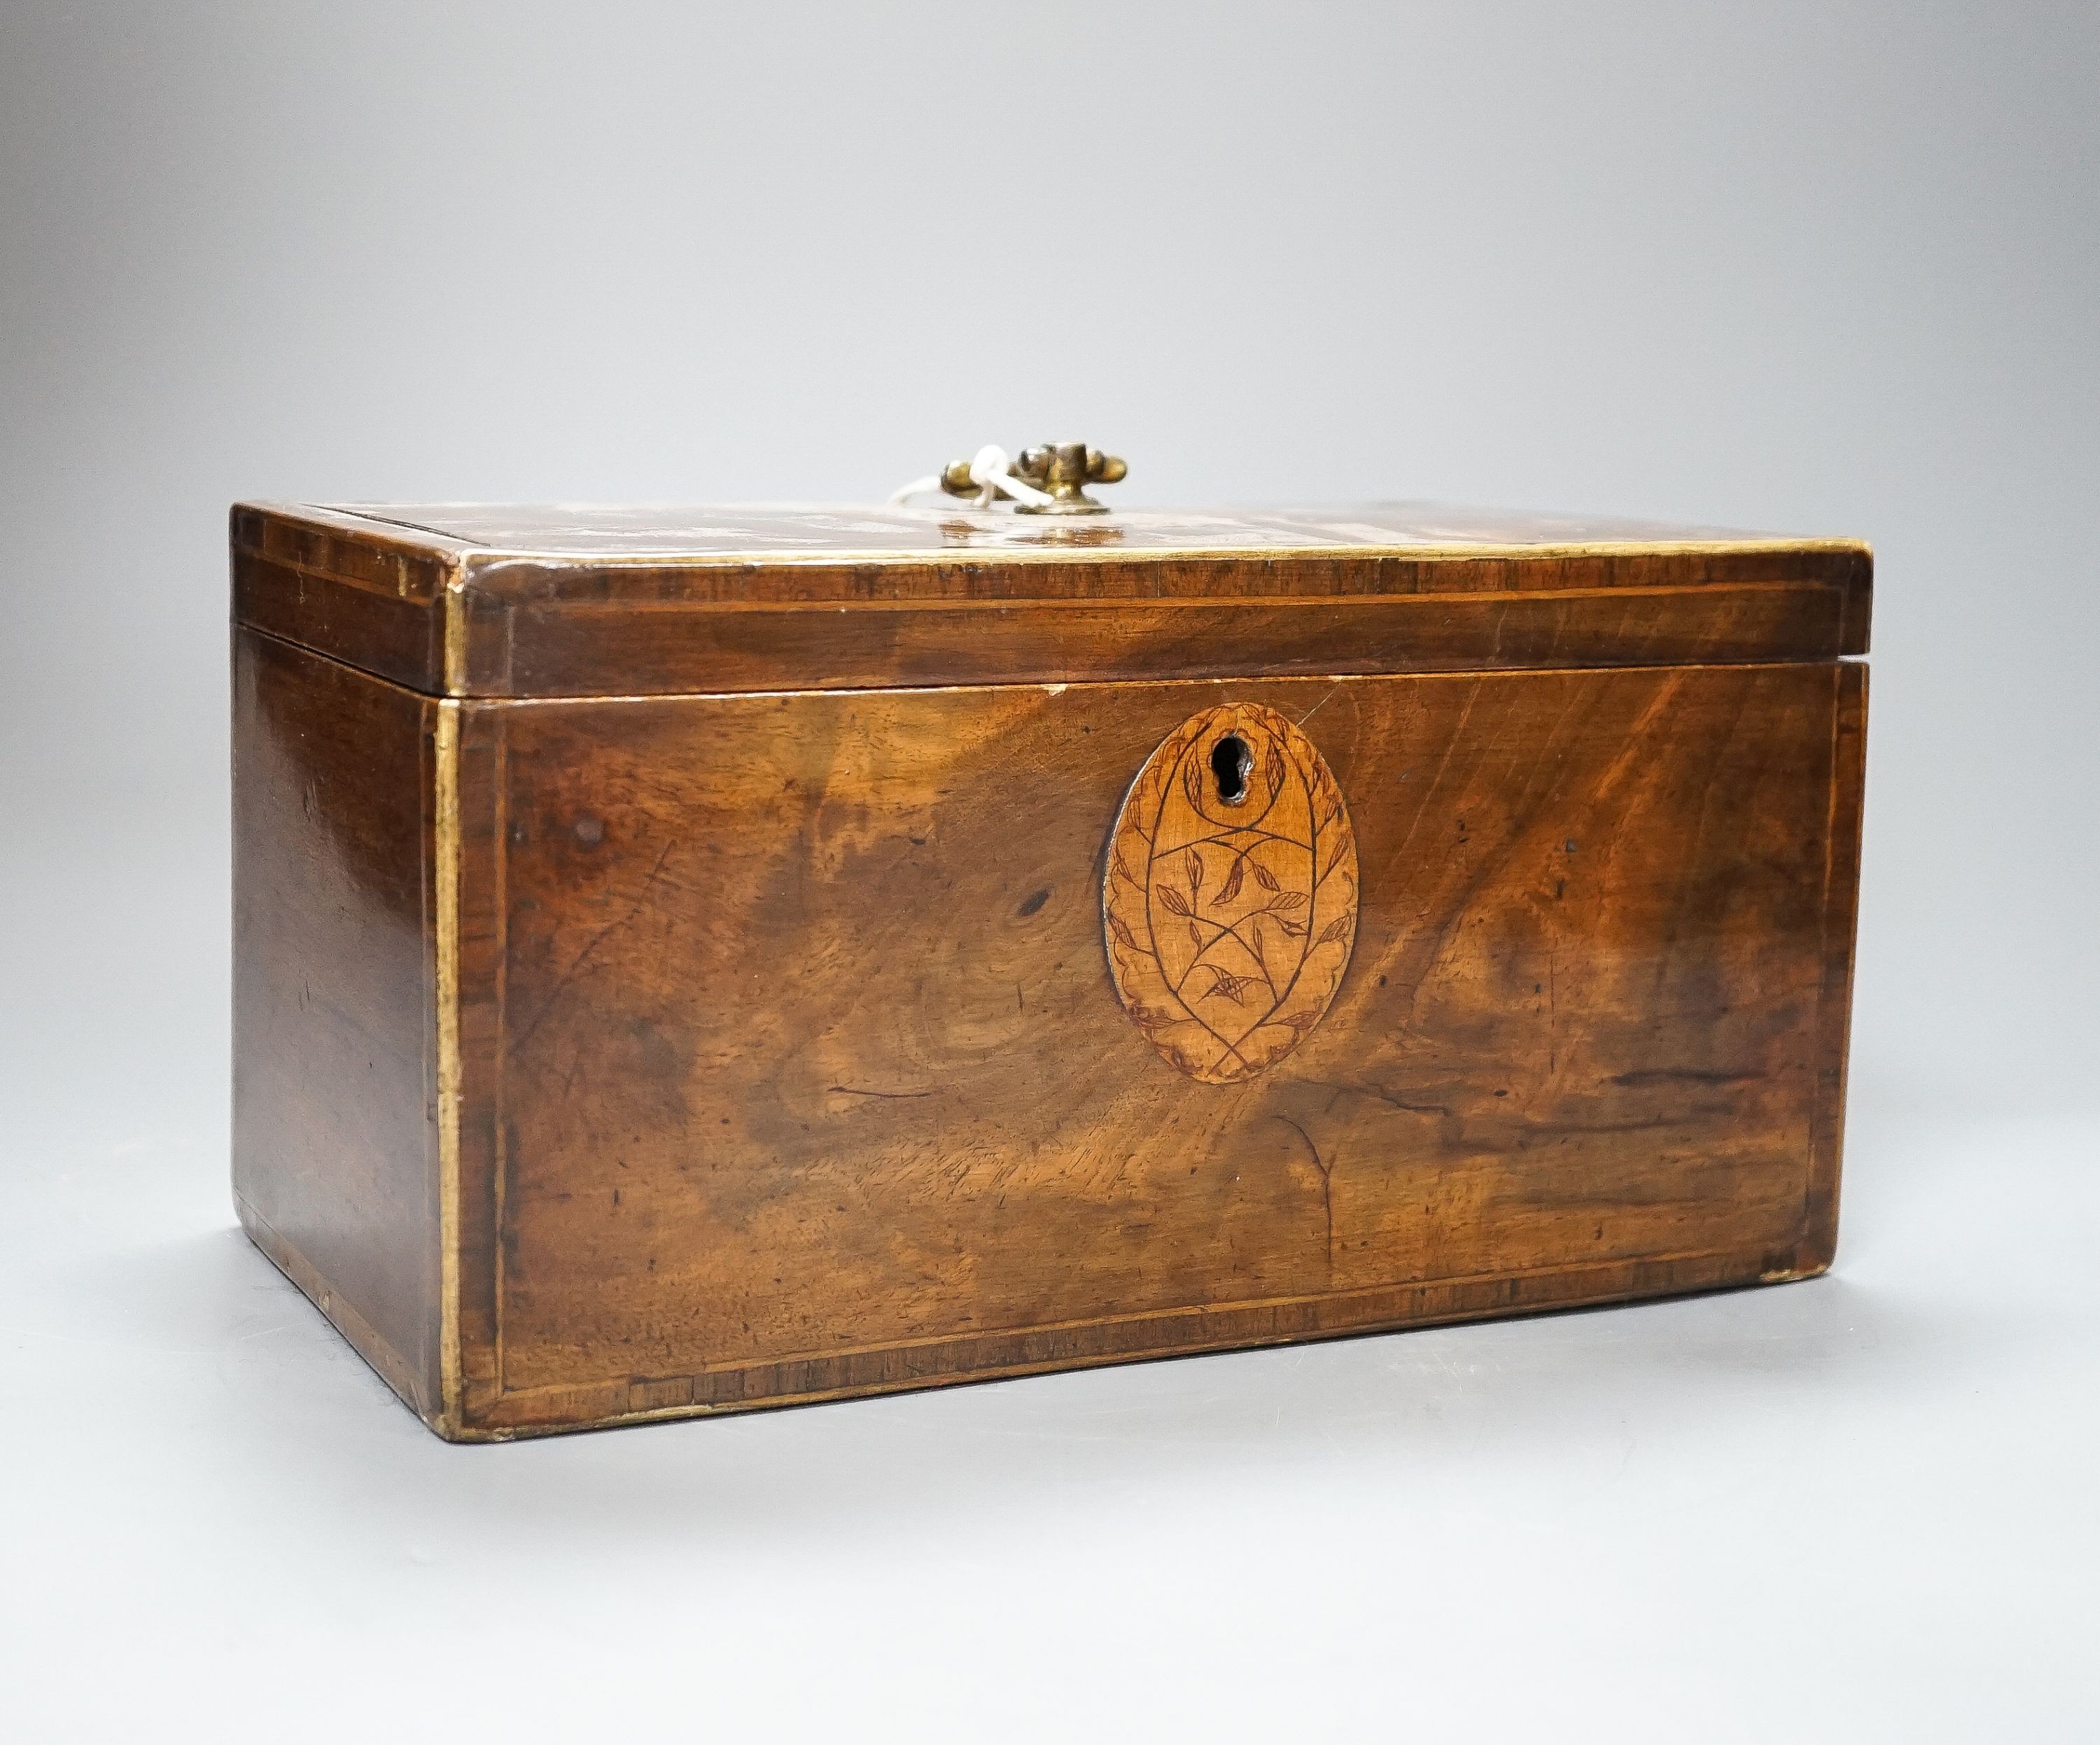 A George III inlaid mahogany tea caddy, lacking interior, 28cm